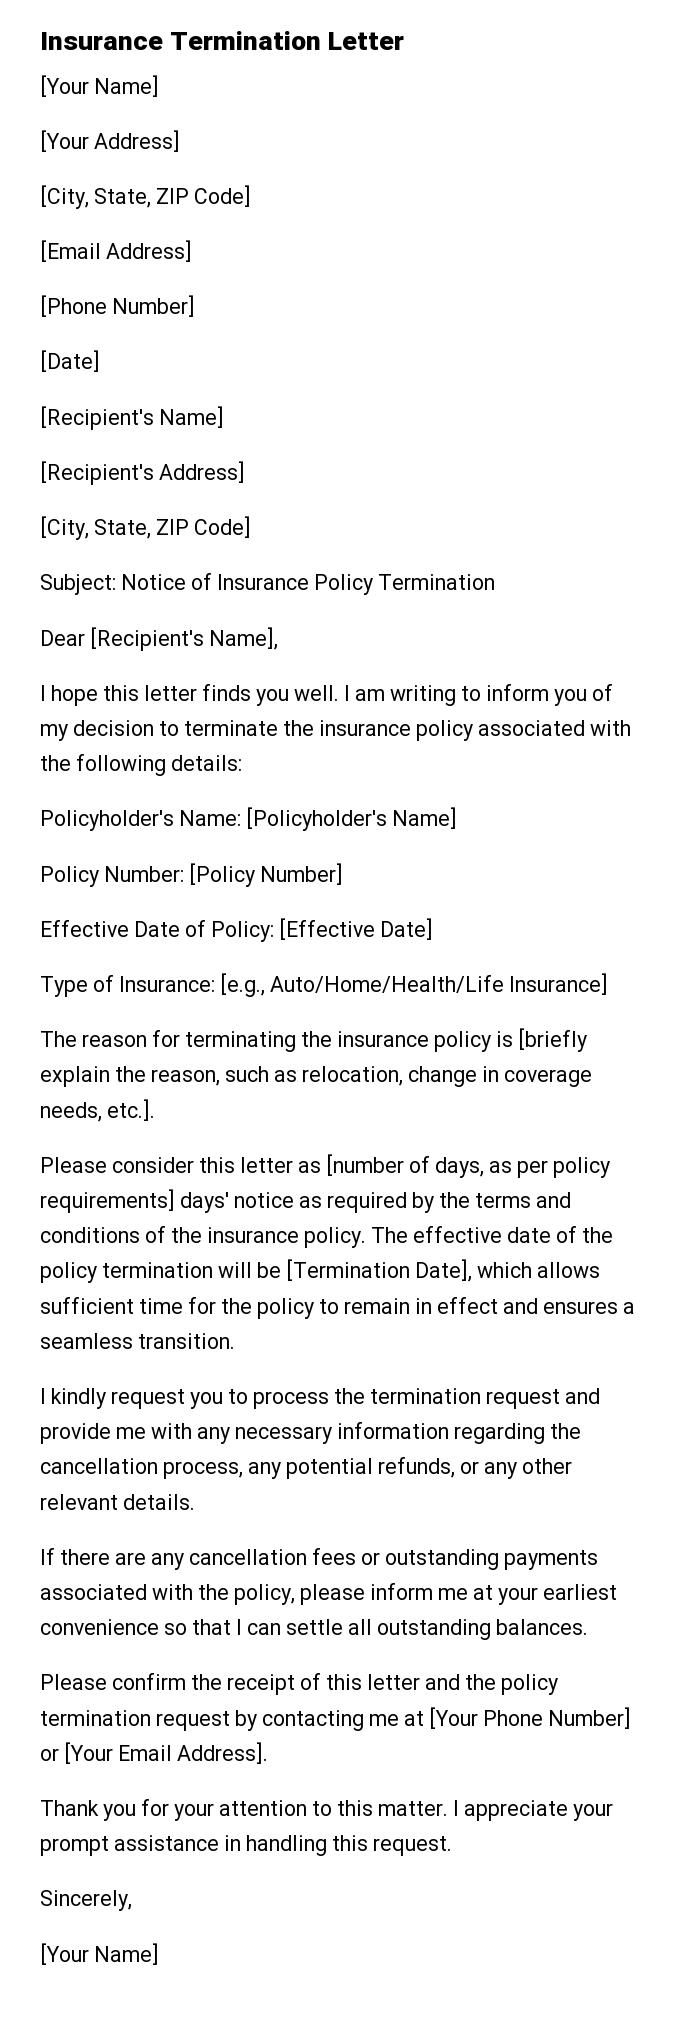 Insurance Termination Letter